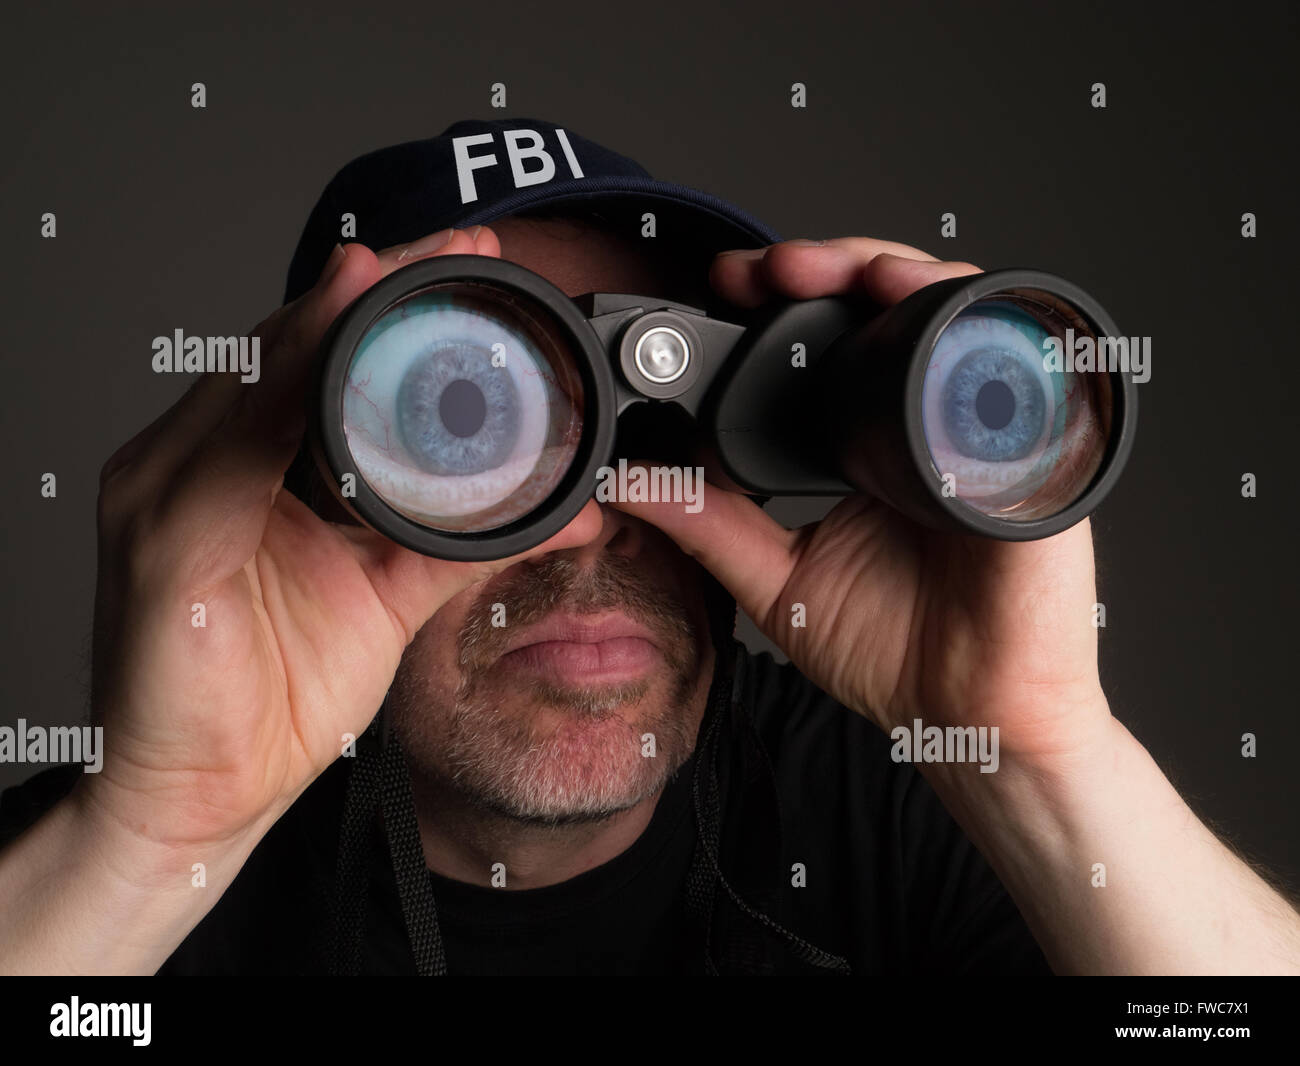 FBI agent with big cartoon eyes and binoculars Stock Photo